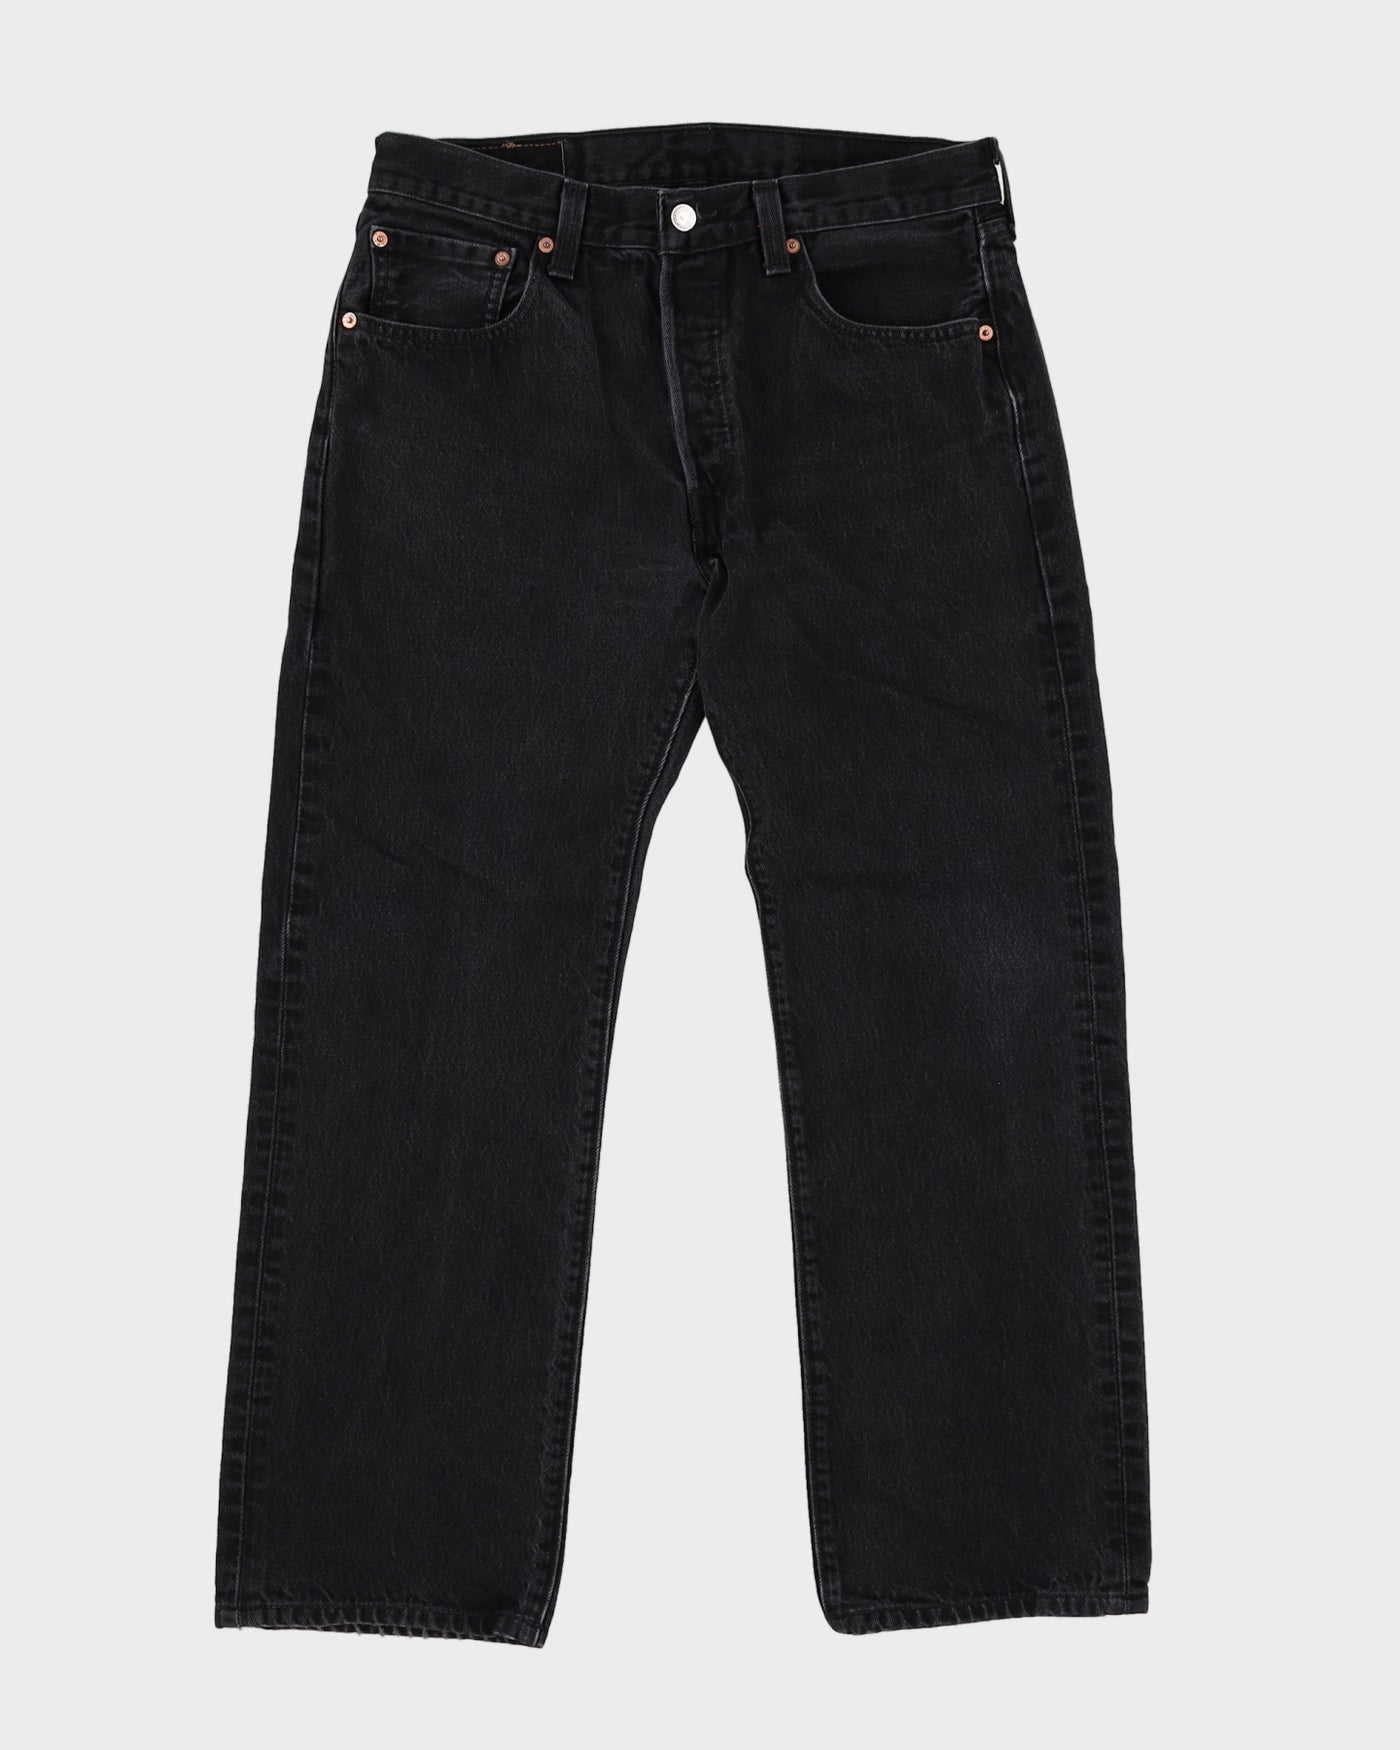 Levi's 501 Black Jeans - W32 L28